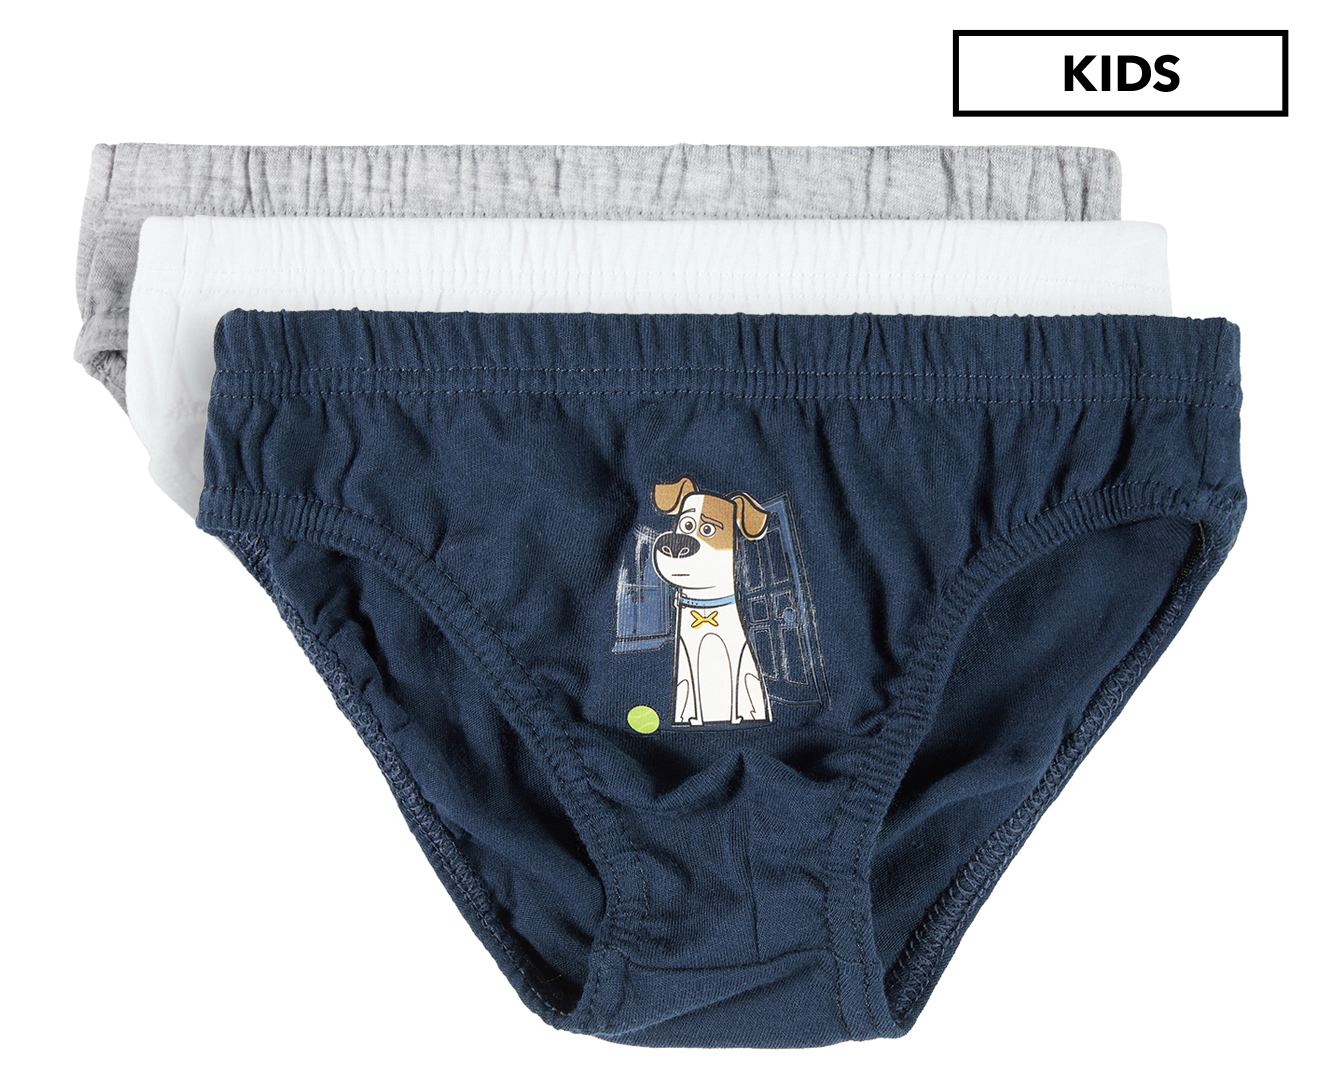 The Secret Life Of Pets Boys' Underwear 3-Pack - Grey/White/Navy ...